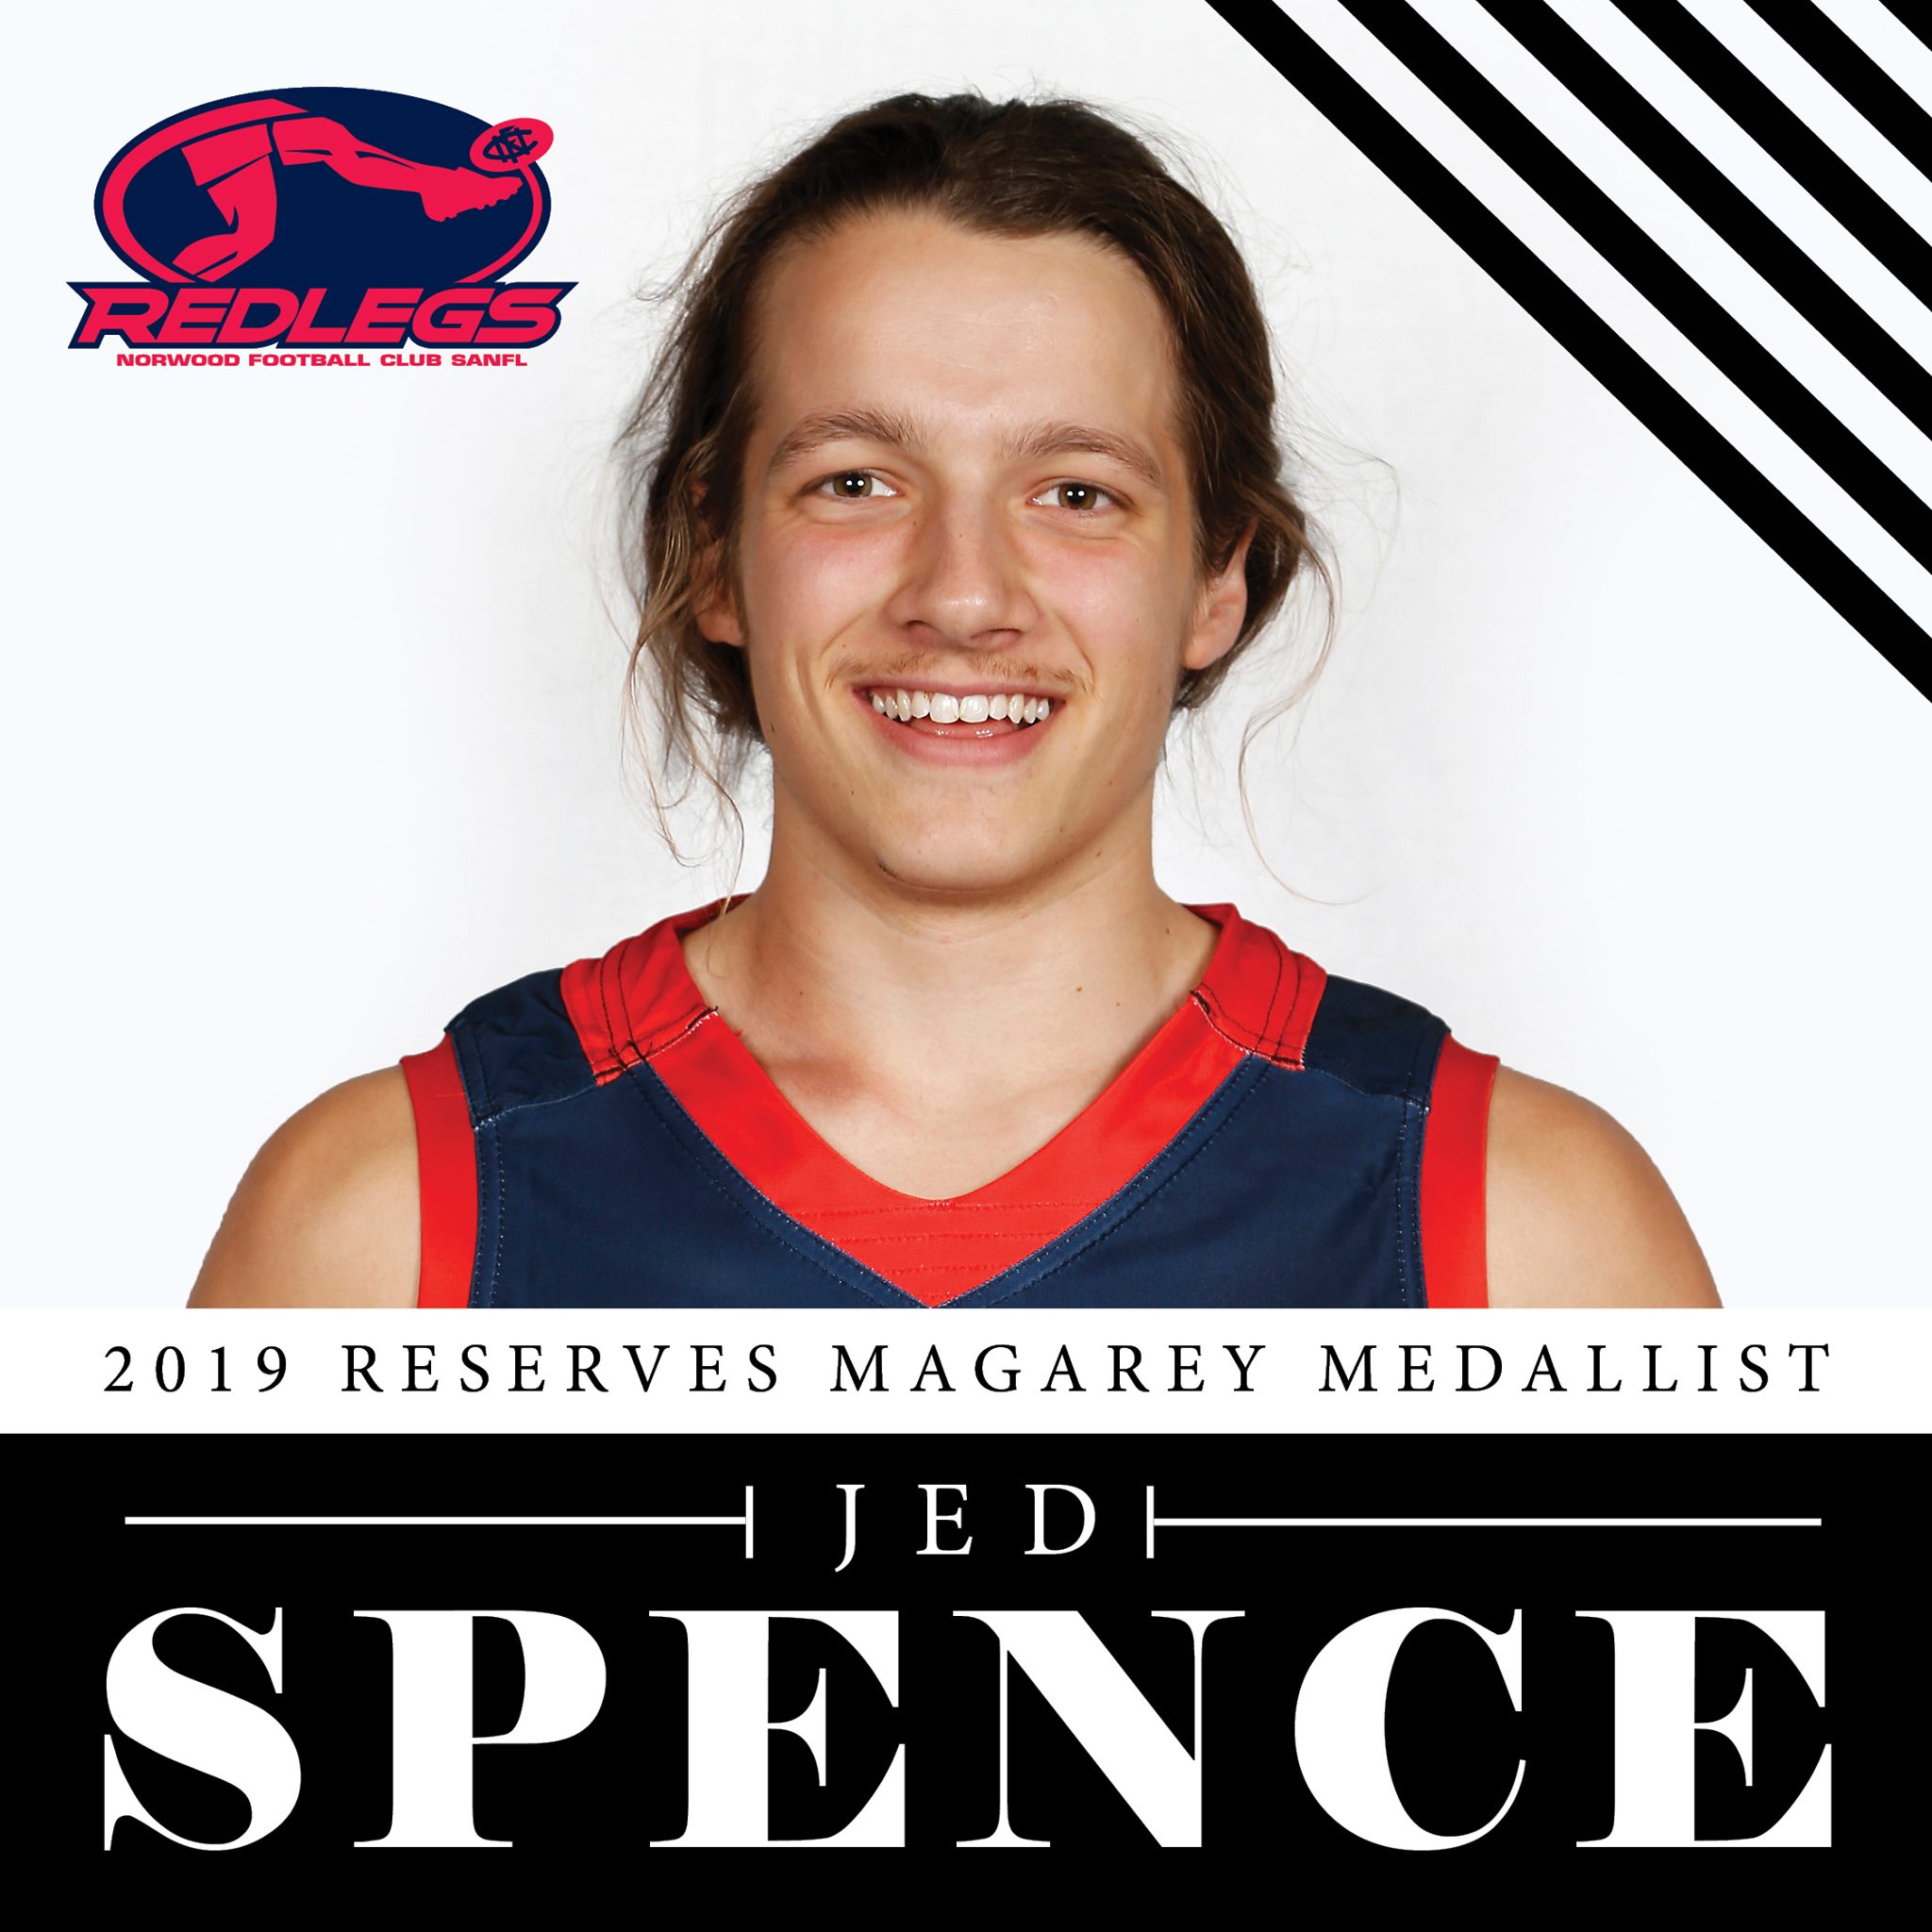 Jed Spence - 2019 Reserves Megary Medal